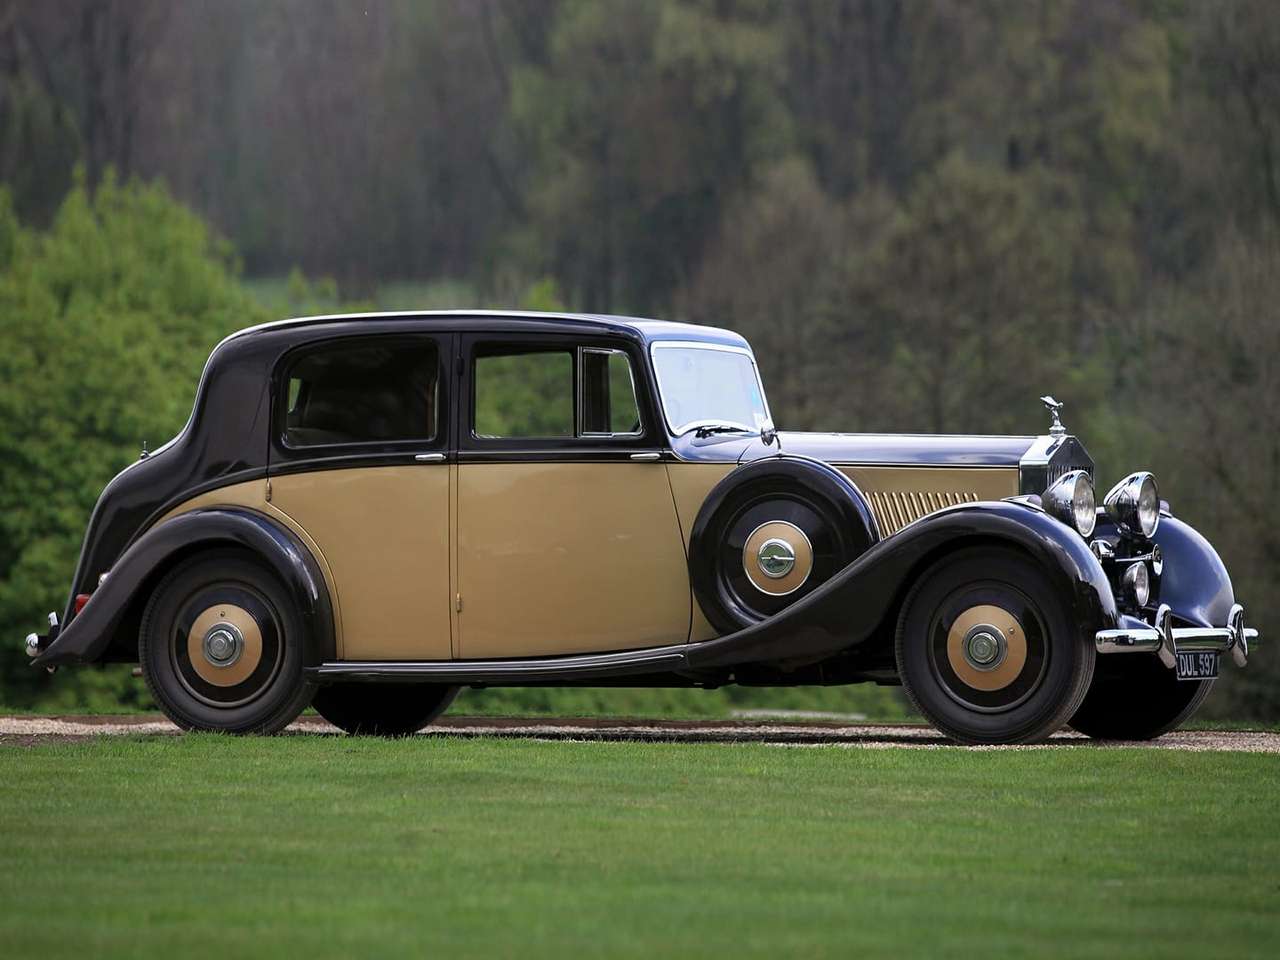 1937 Rolls-Royce 25.30 HP Saloon by Hooper. puzzle online